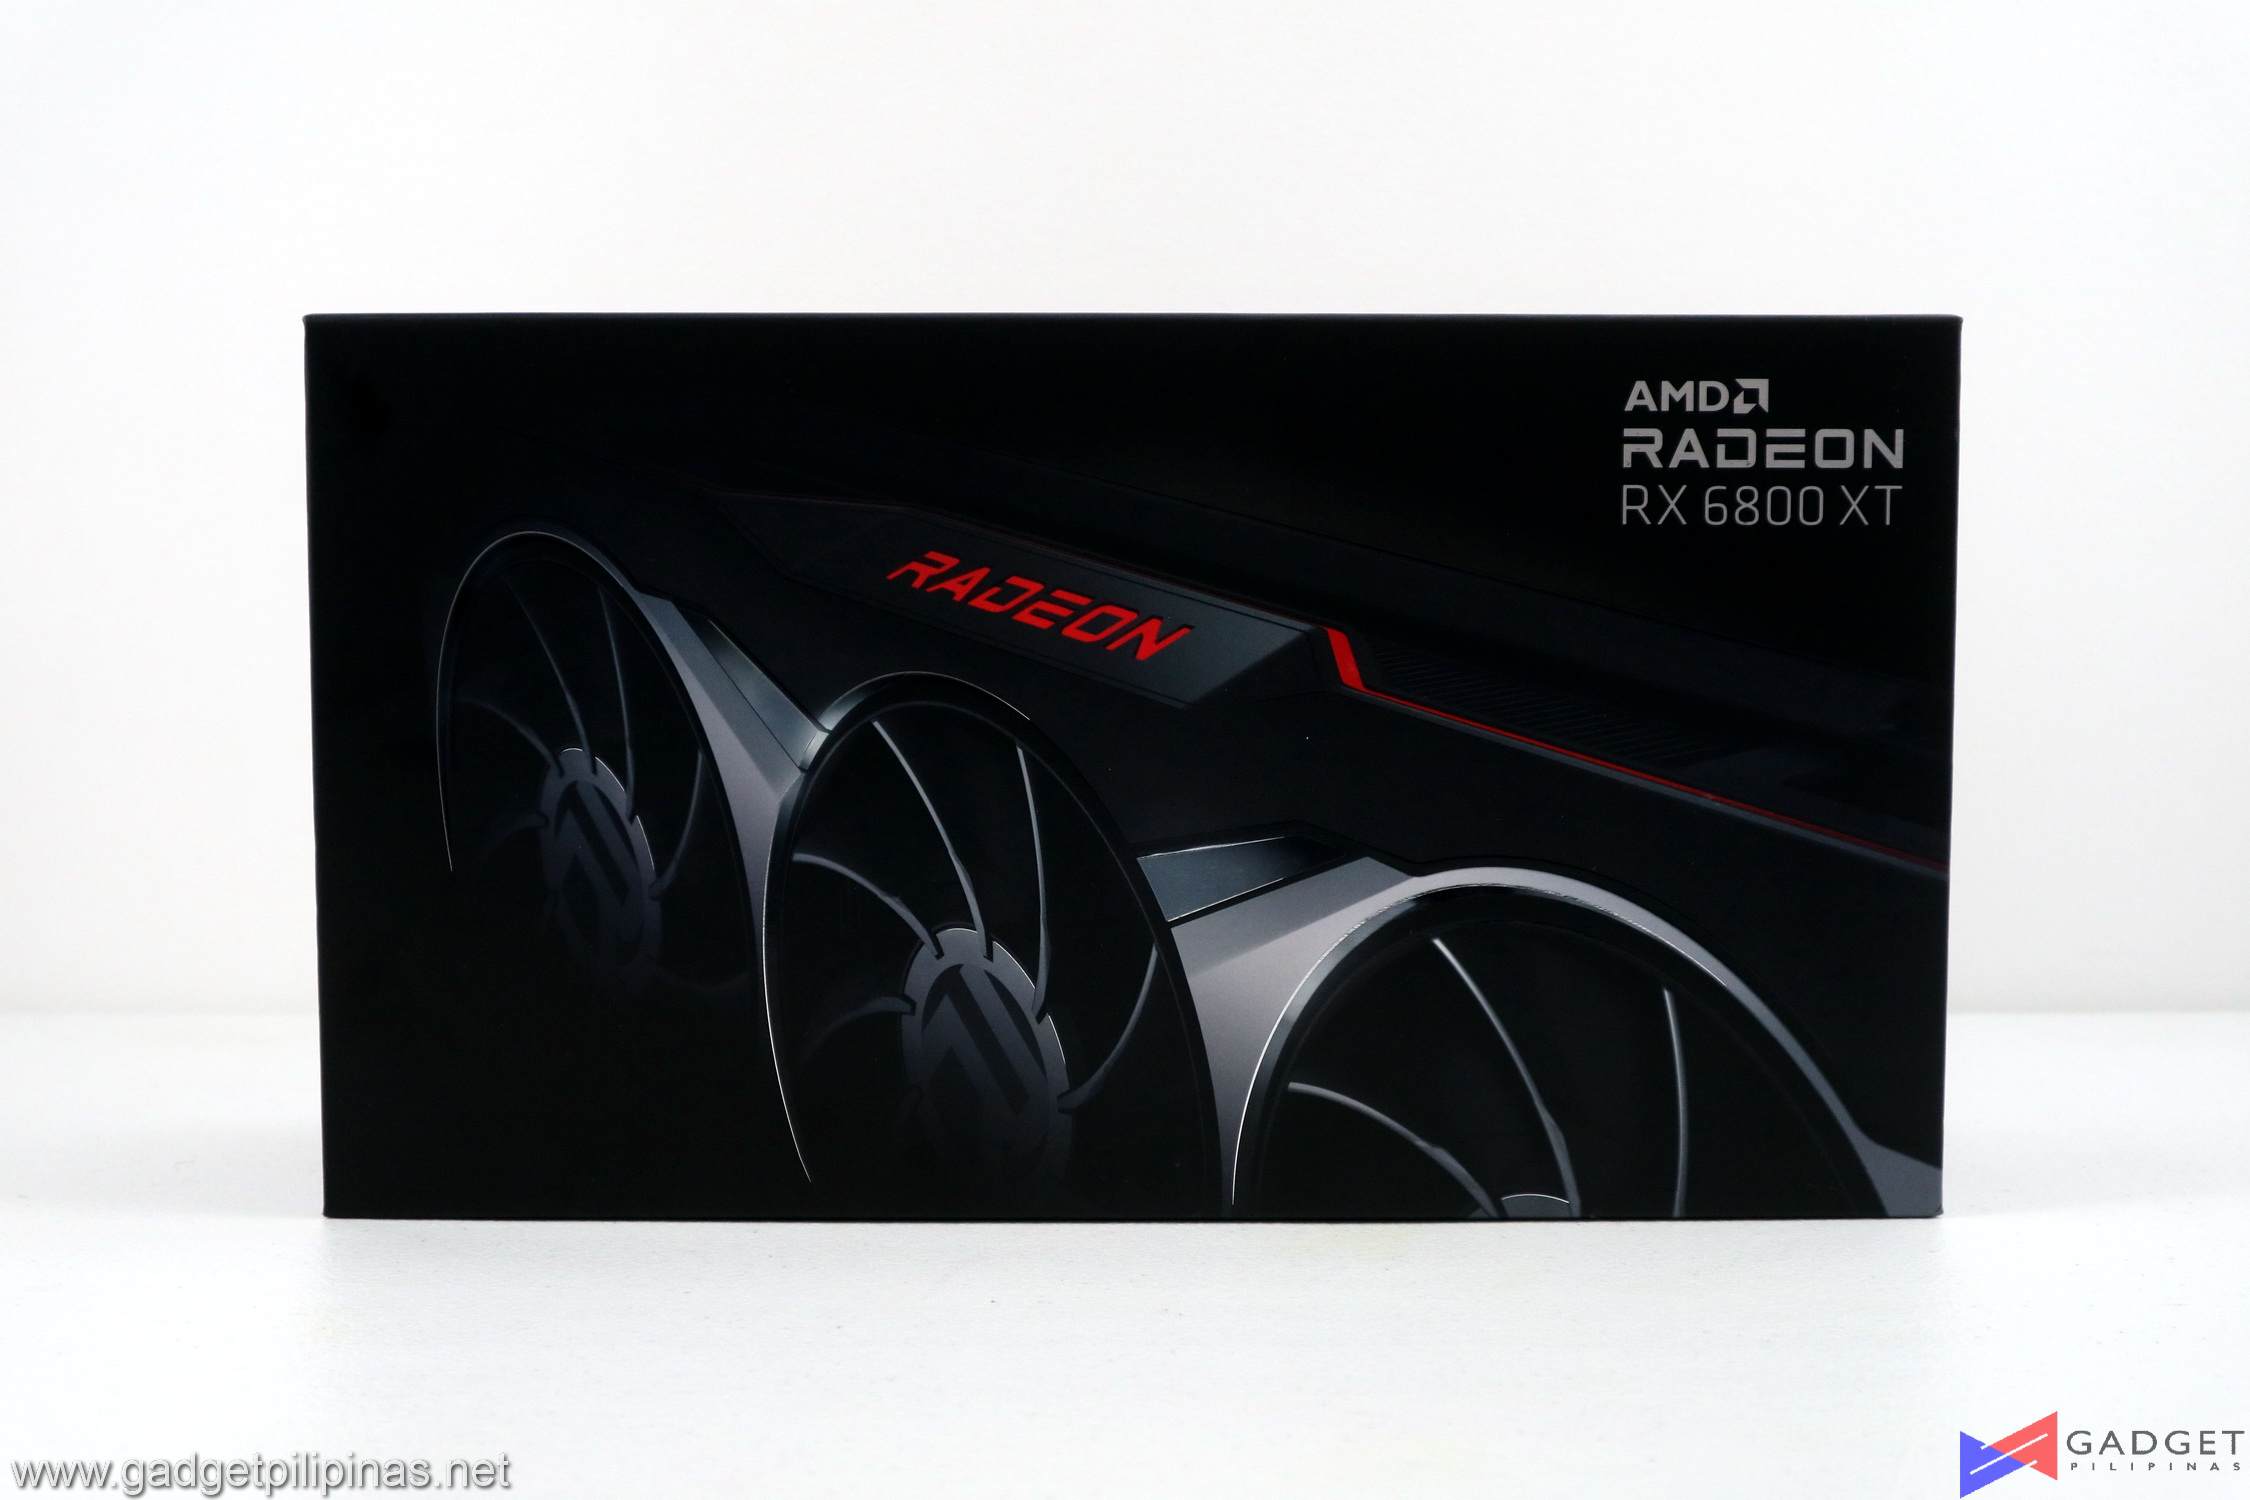 AMD Radeon RX 6800 XT Review - Packaging